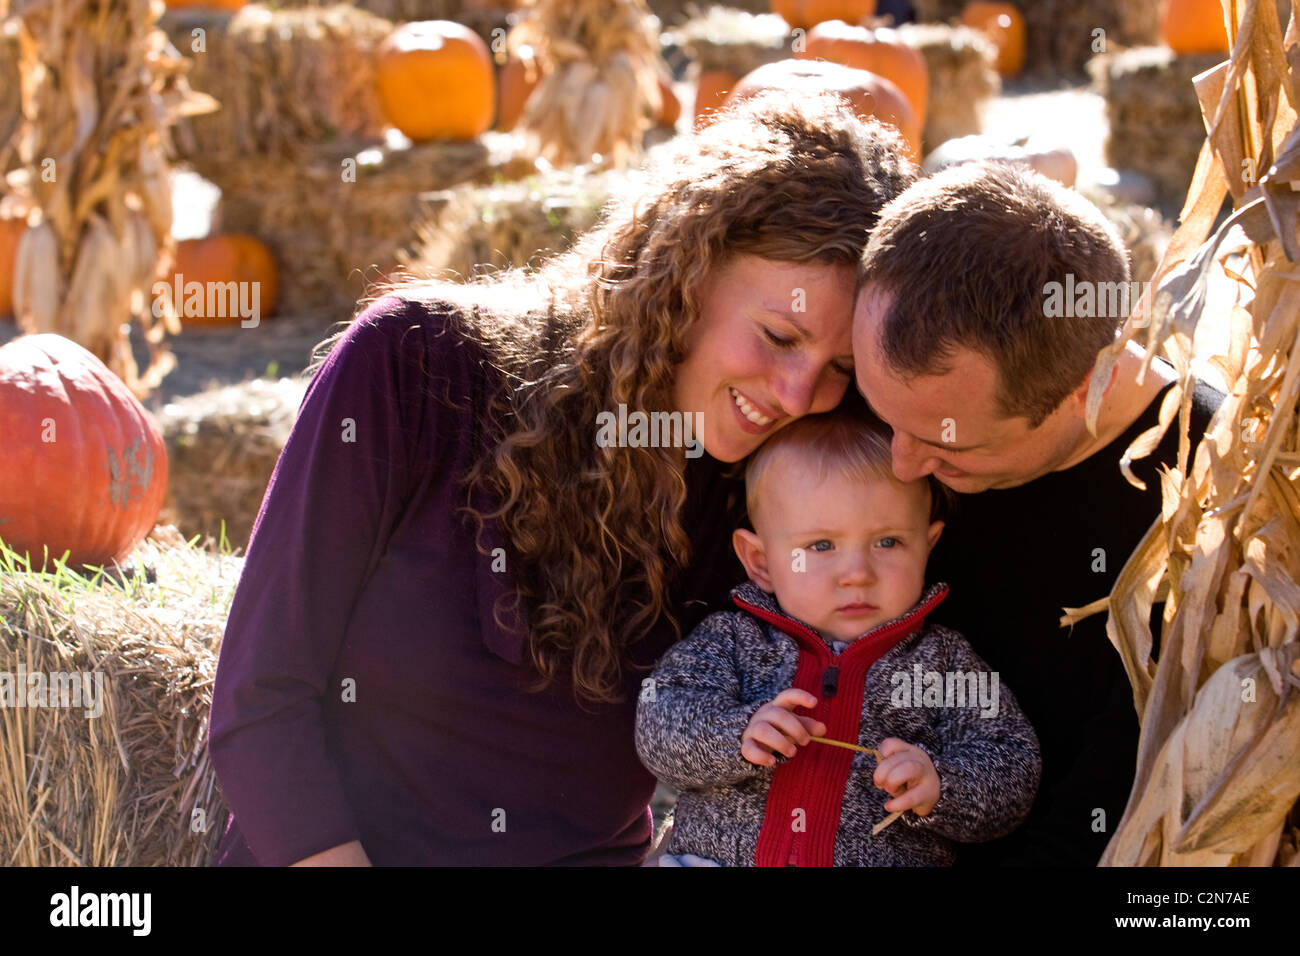 A family enjoying itself at a pumpkin patch. Stock Photo